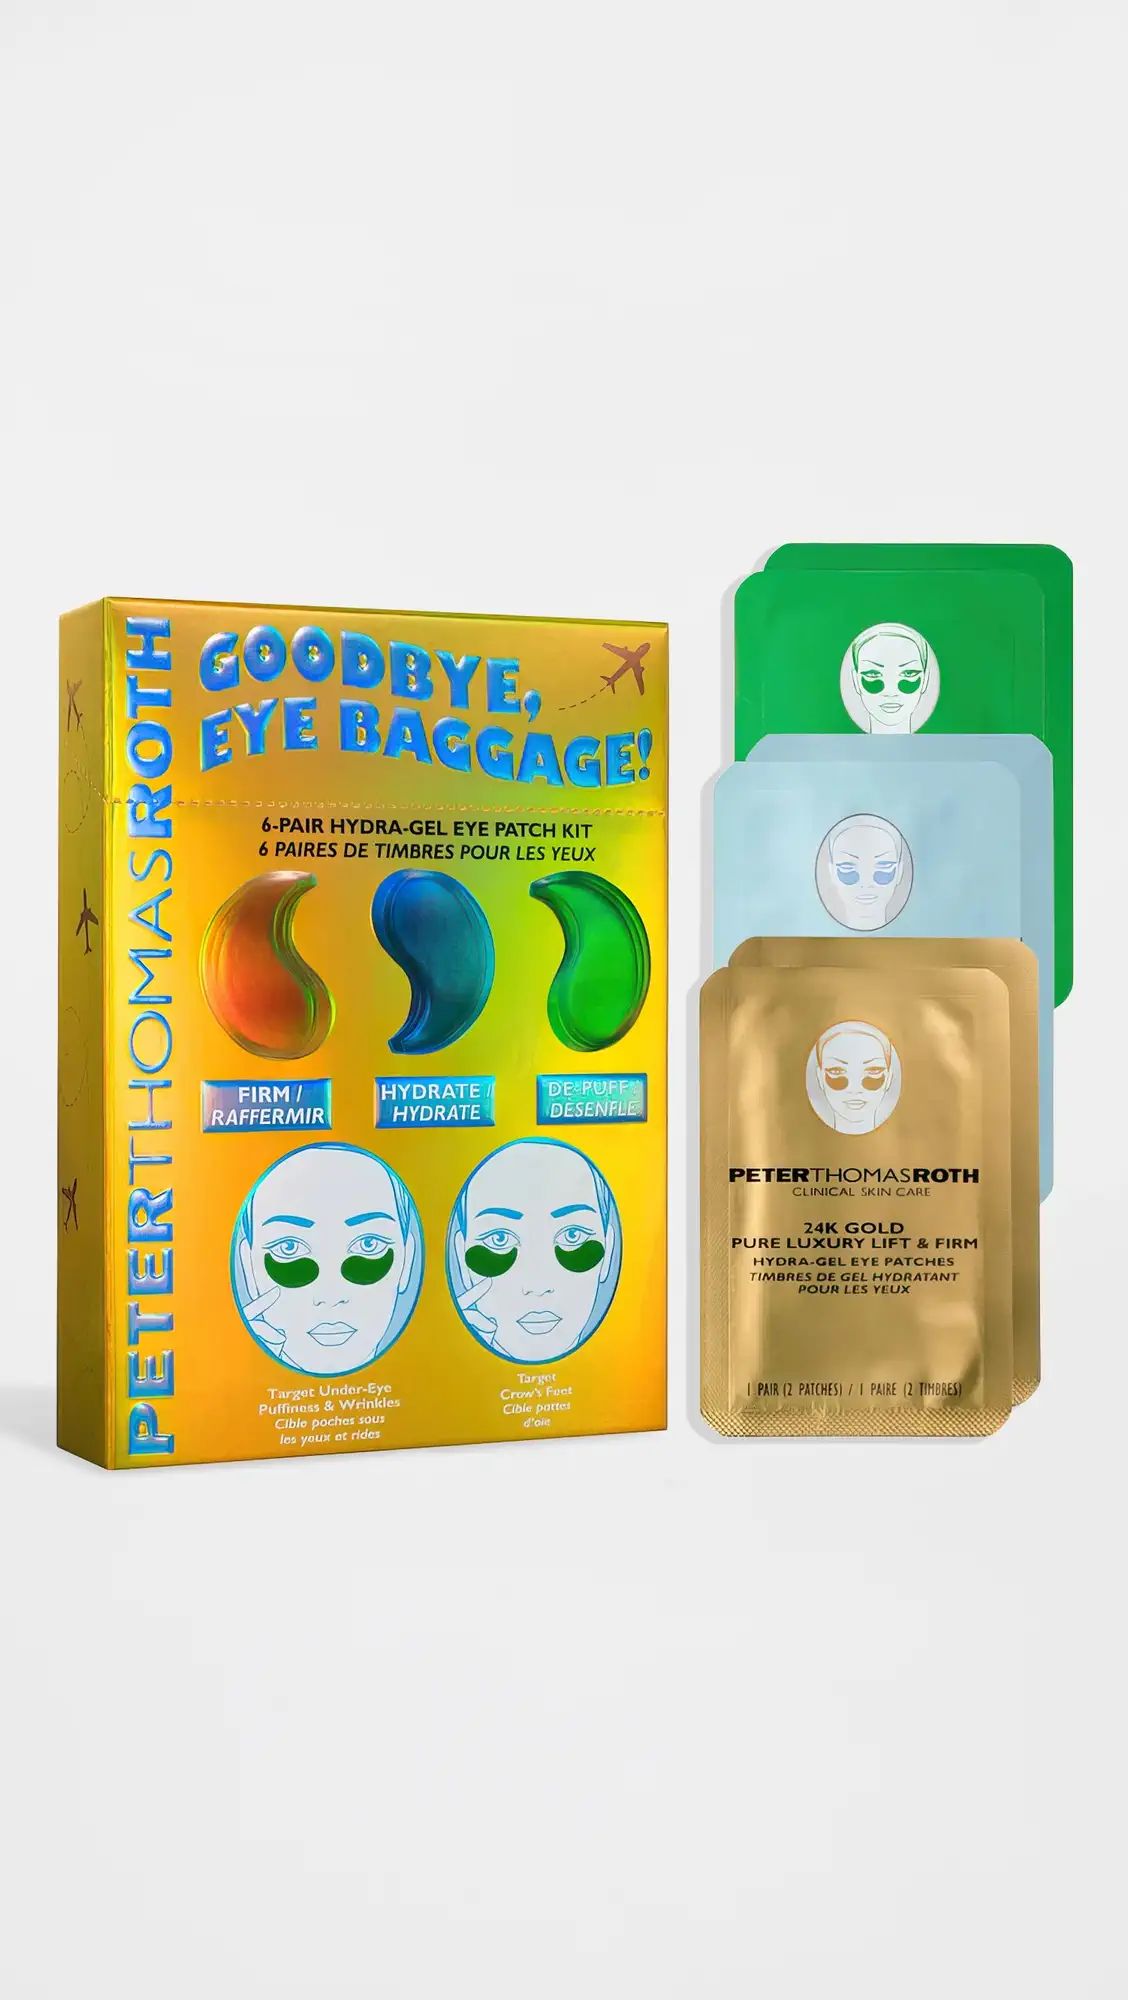 Peter Thomas Roth Goodbye, Eye Baggage! 6-Pair Hydra-Gel Eye Patch Kit | Shopbop | Shopbop